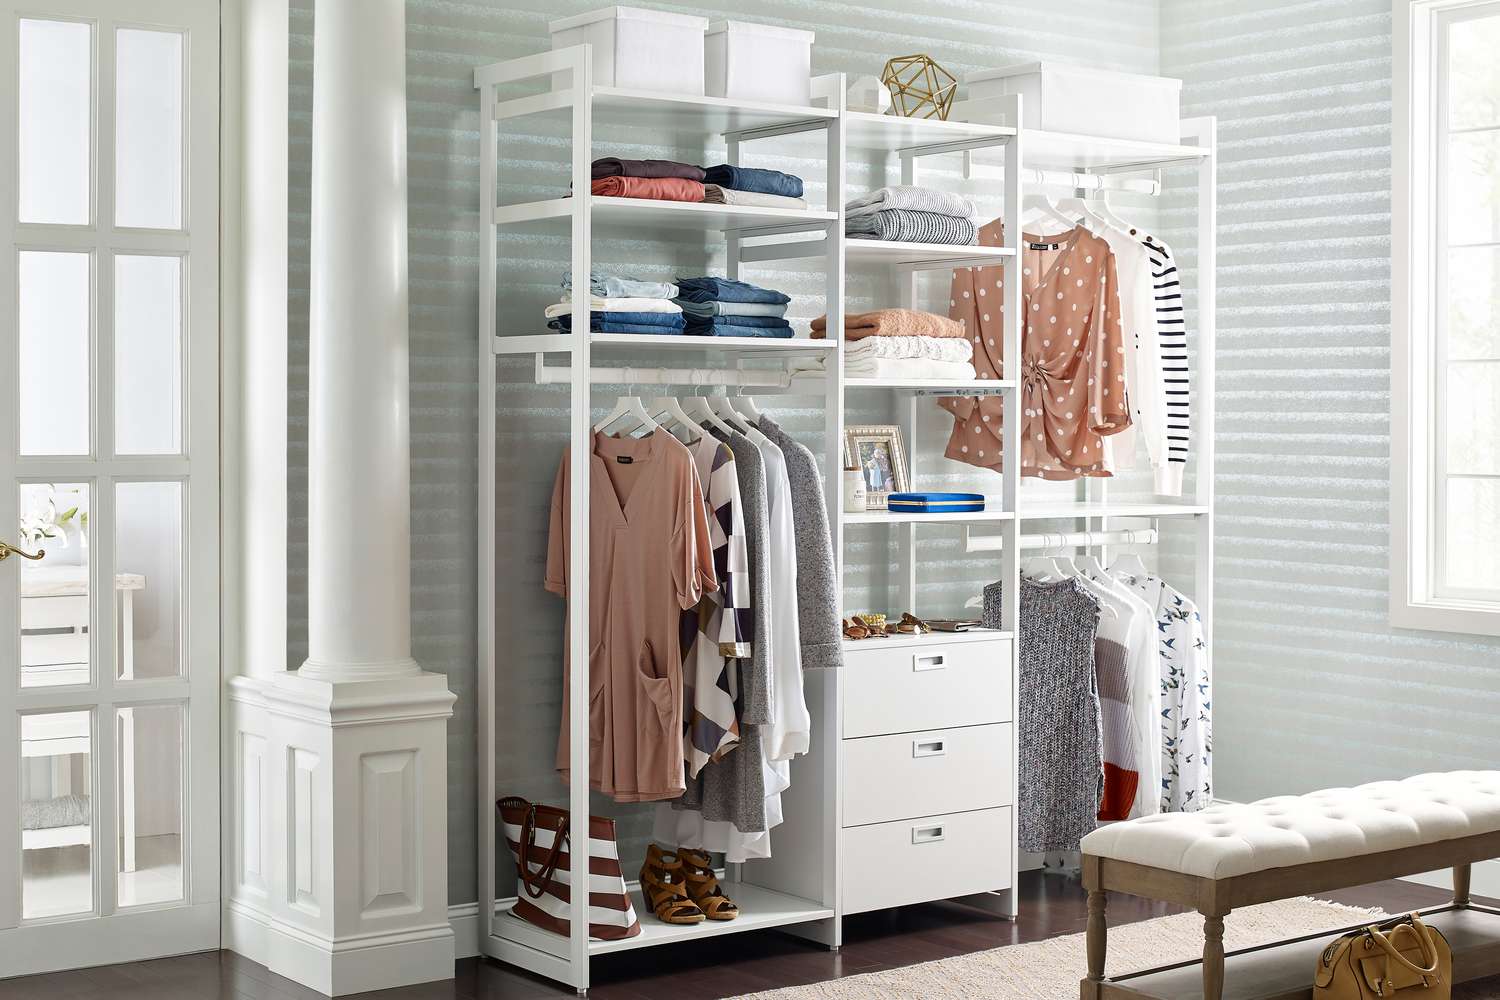 7-foot tall closet organization system